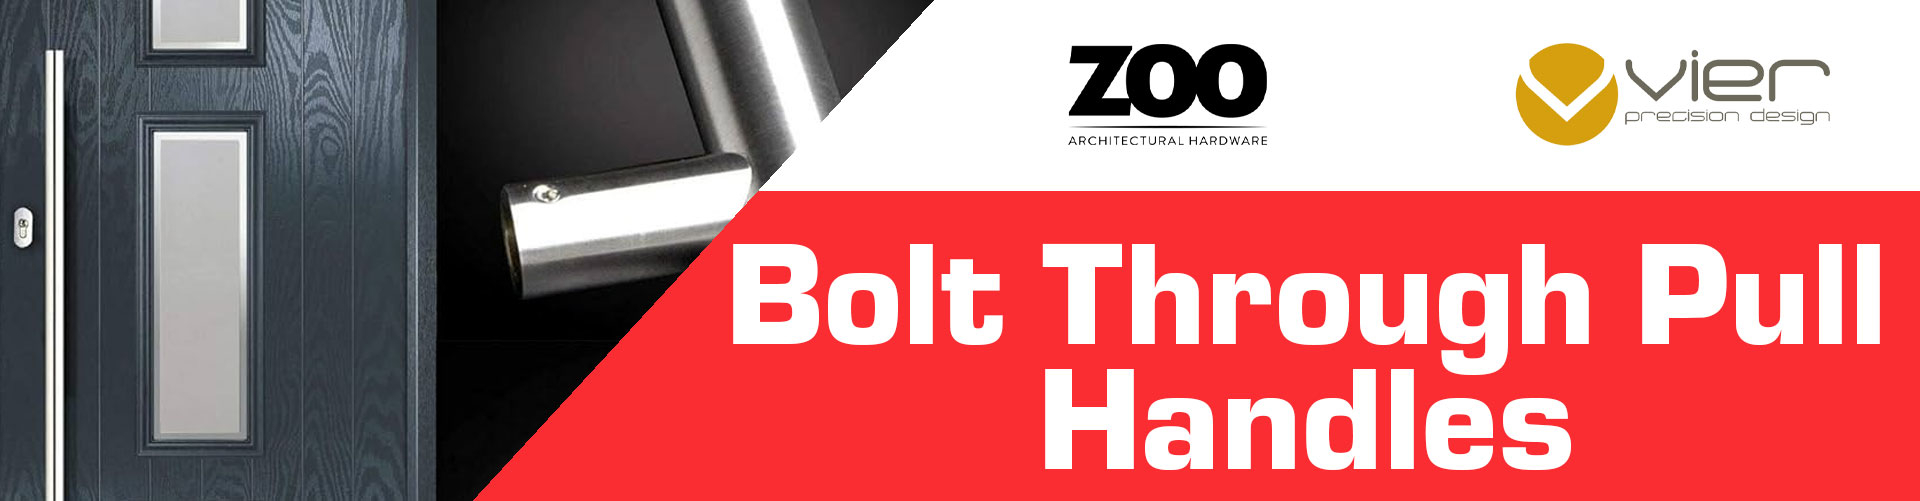 Bolt Through Pull Handles